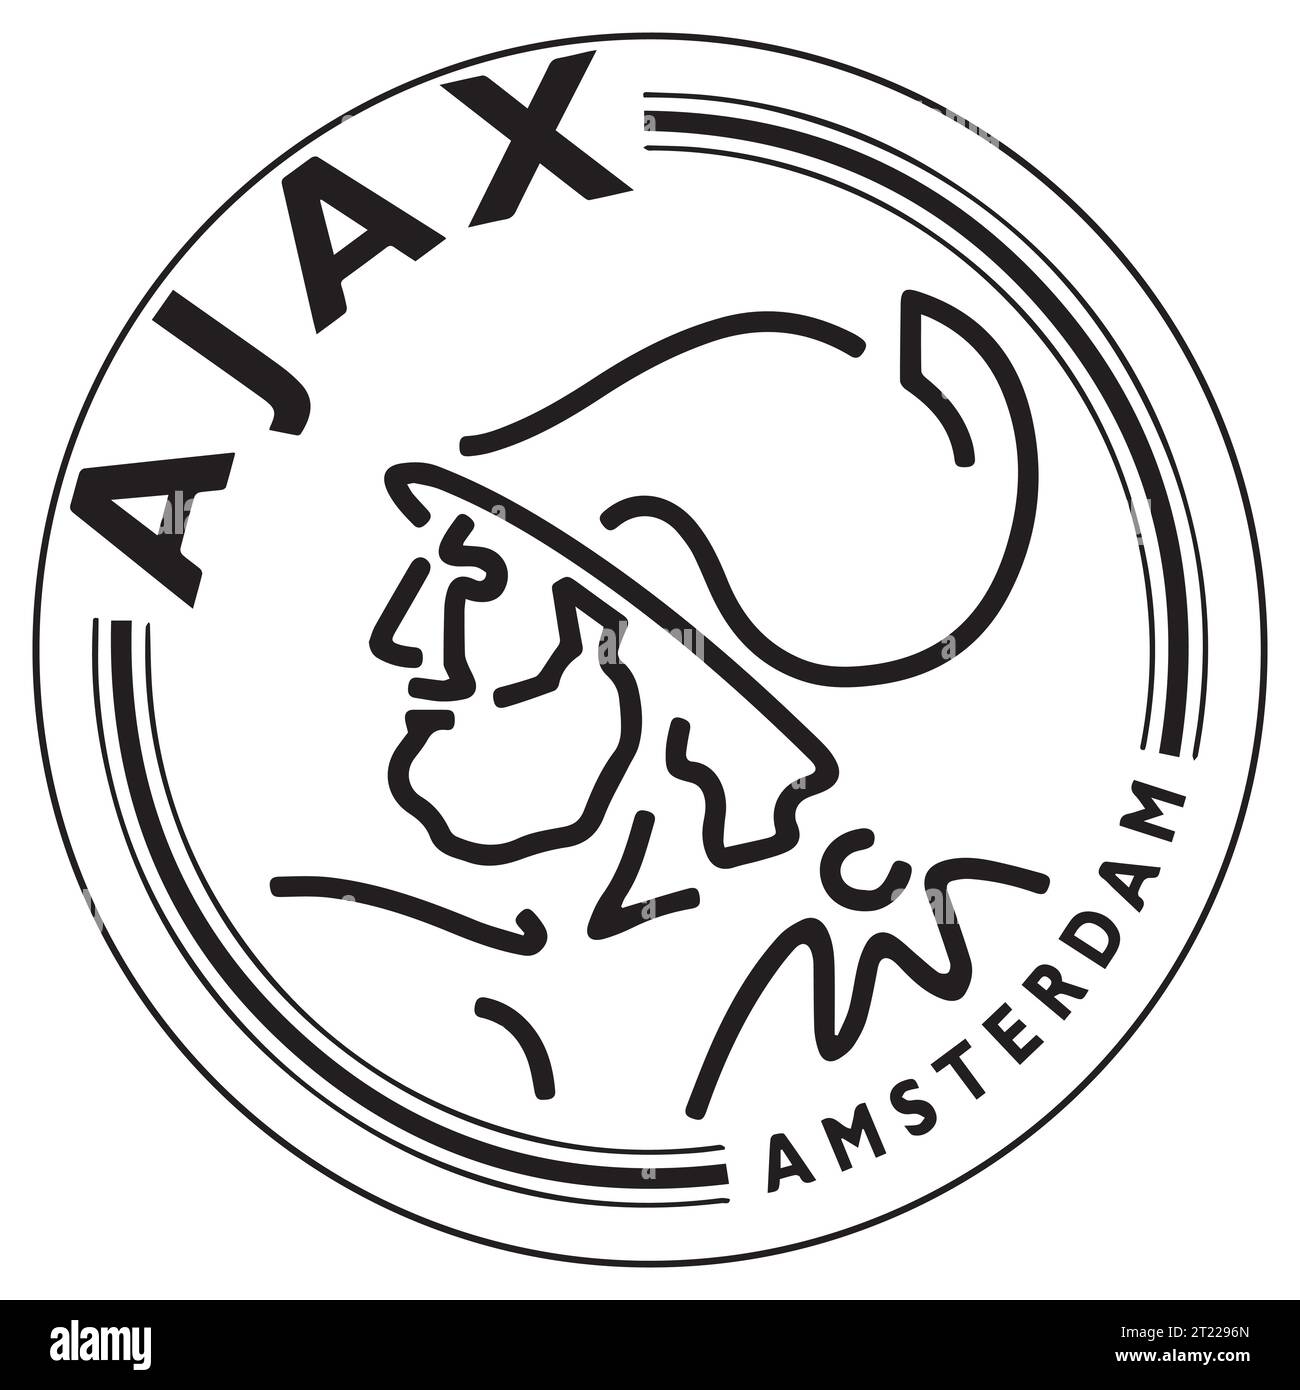 AFC Ajax Amsterdam Schwarz-weiß-Logo Niederlande Profi-Fußball-Liga-System, Vektor-Illustration abstraktes Schwarz-weiß-bearbeitbares Bild Stock Vektor